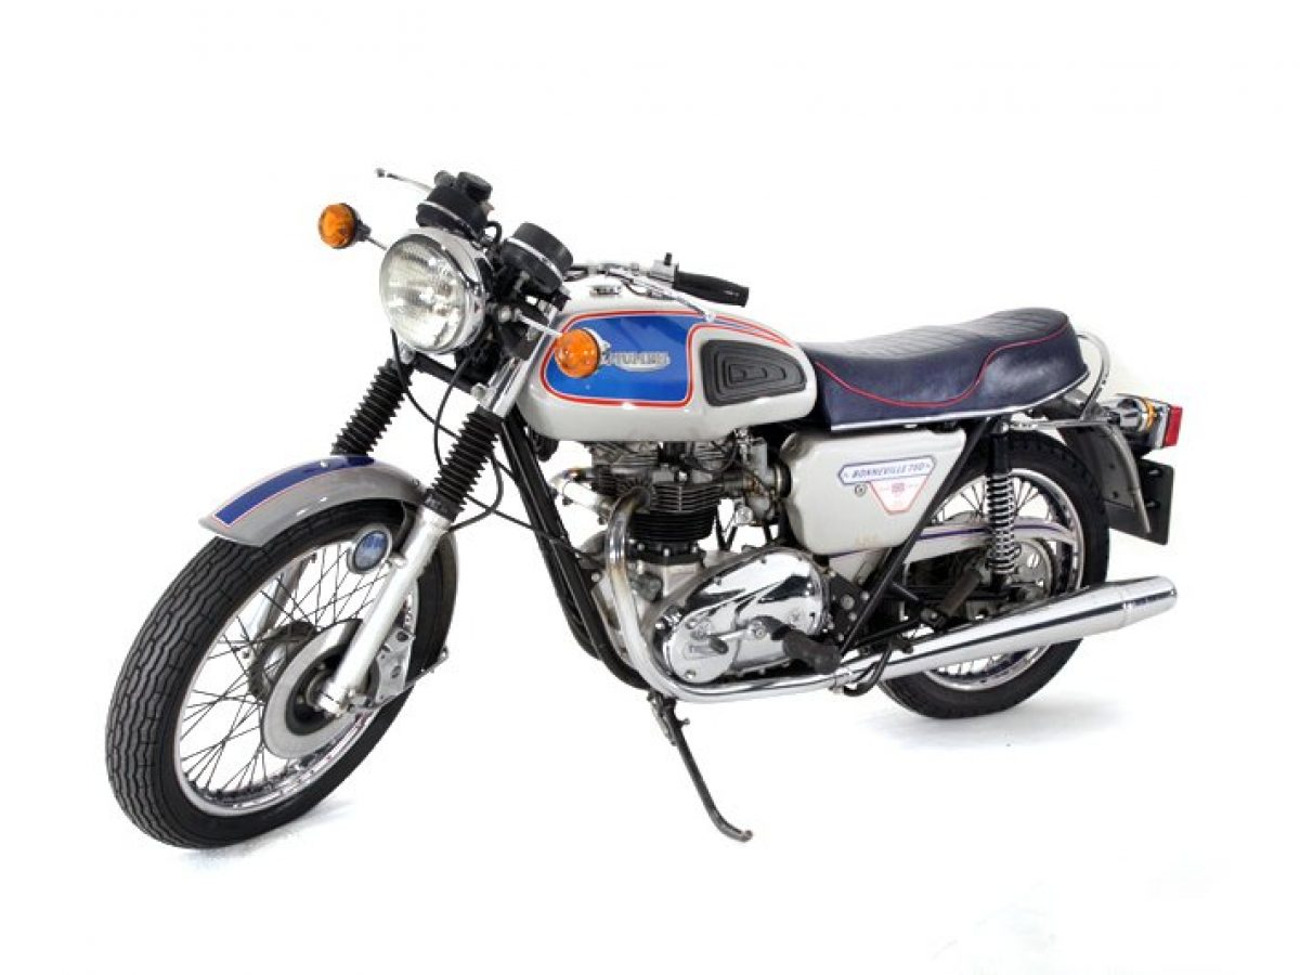 Мотоцикл triumph bonneville t100: характеристика, фото, отзывы